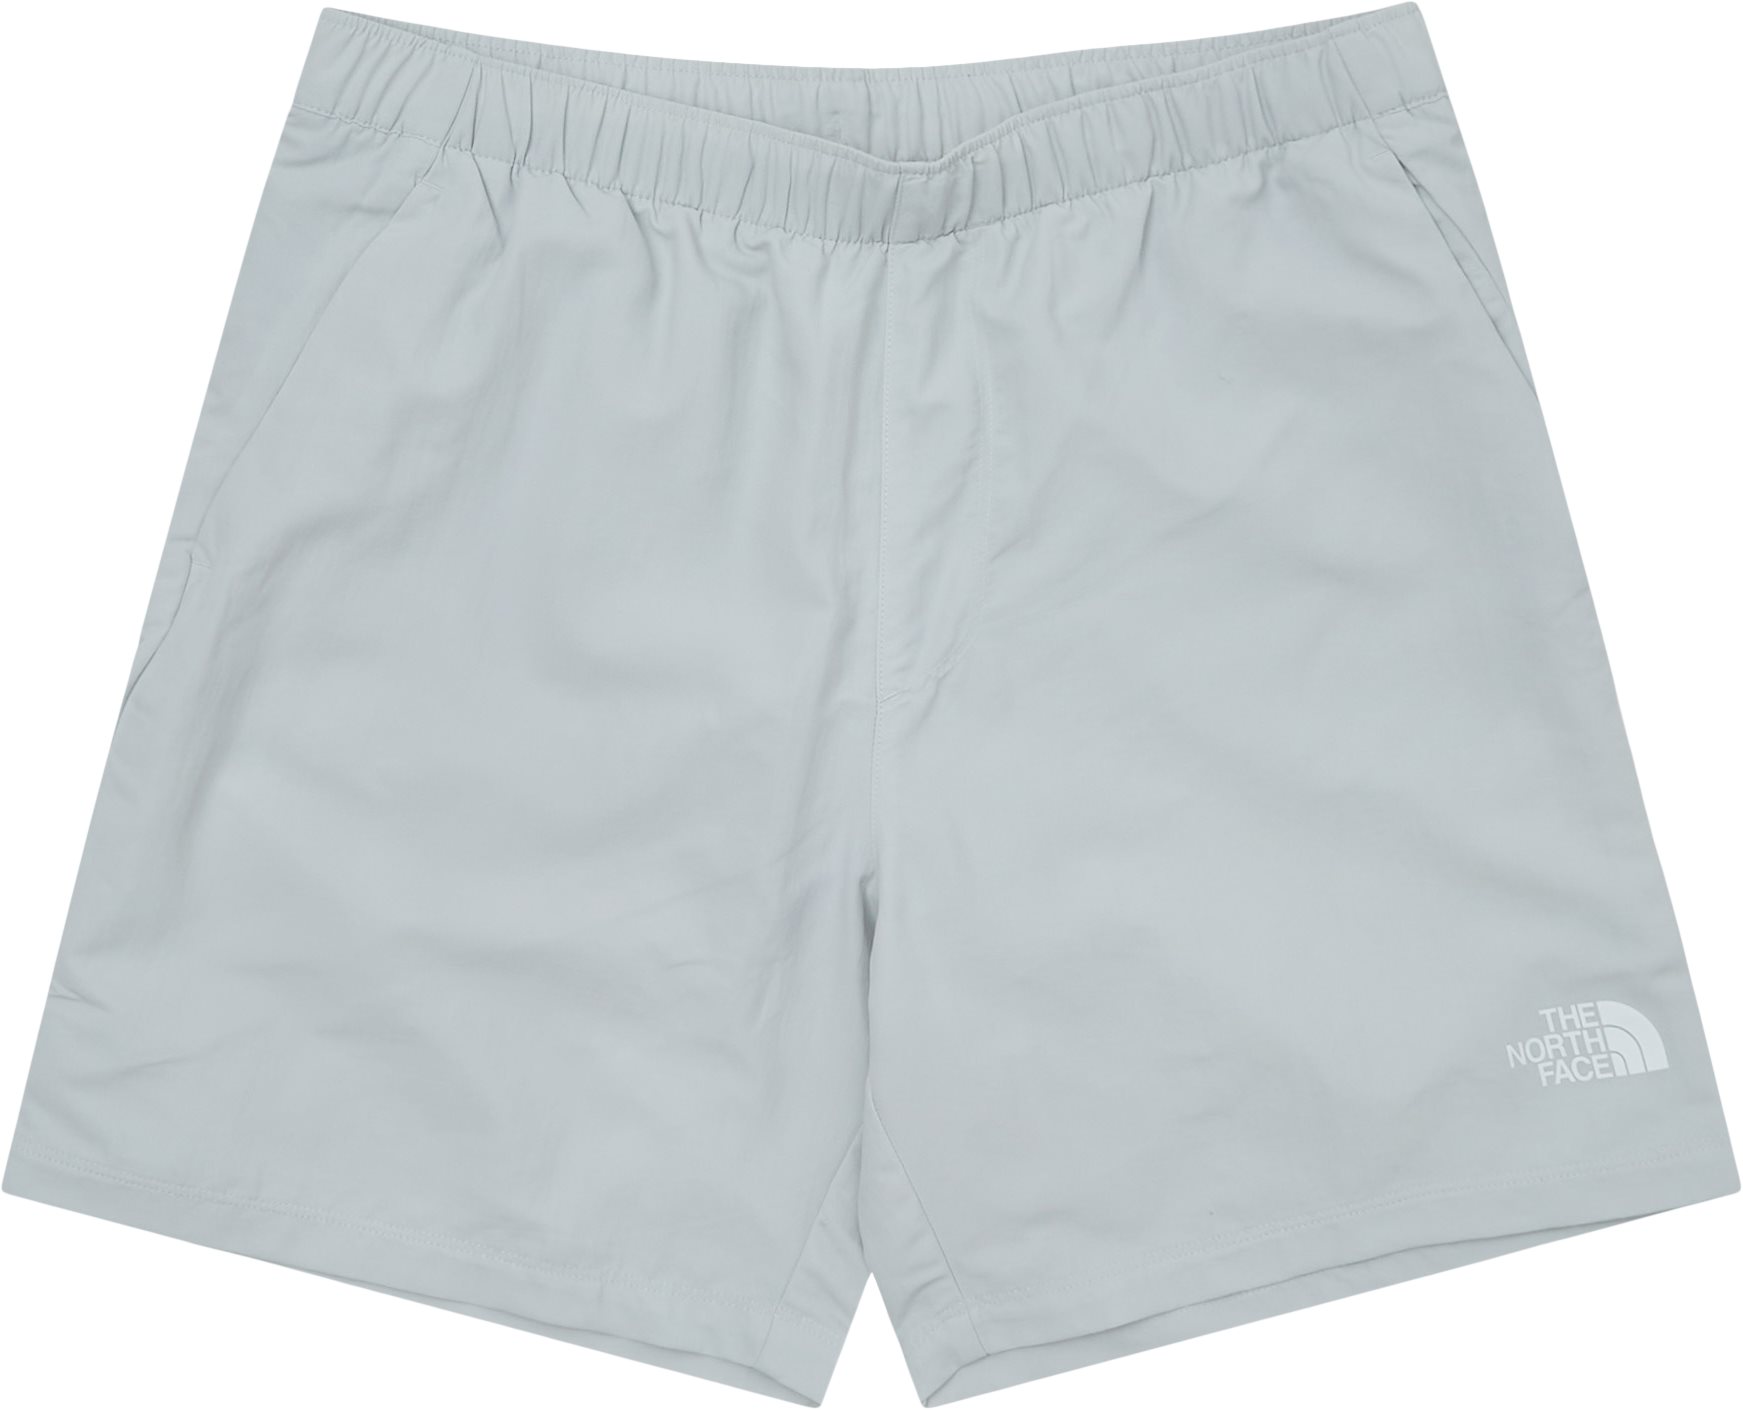 Water Short - Shorts - Regular fit - Grey